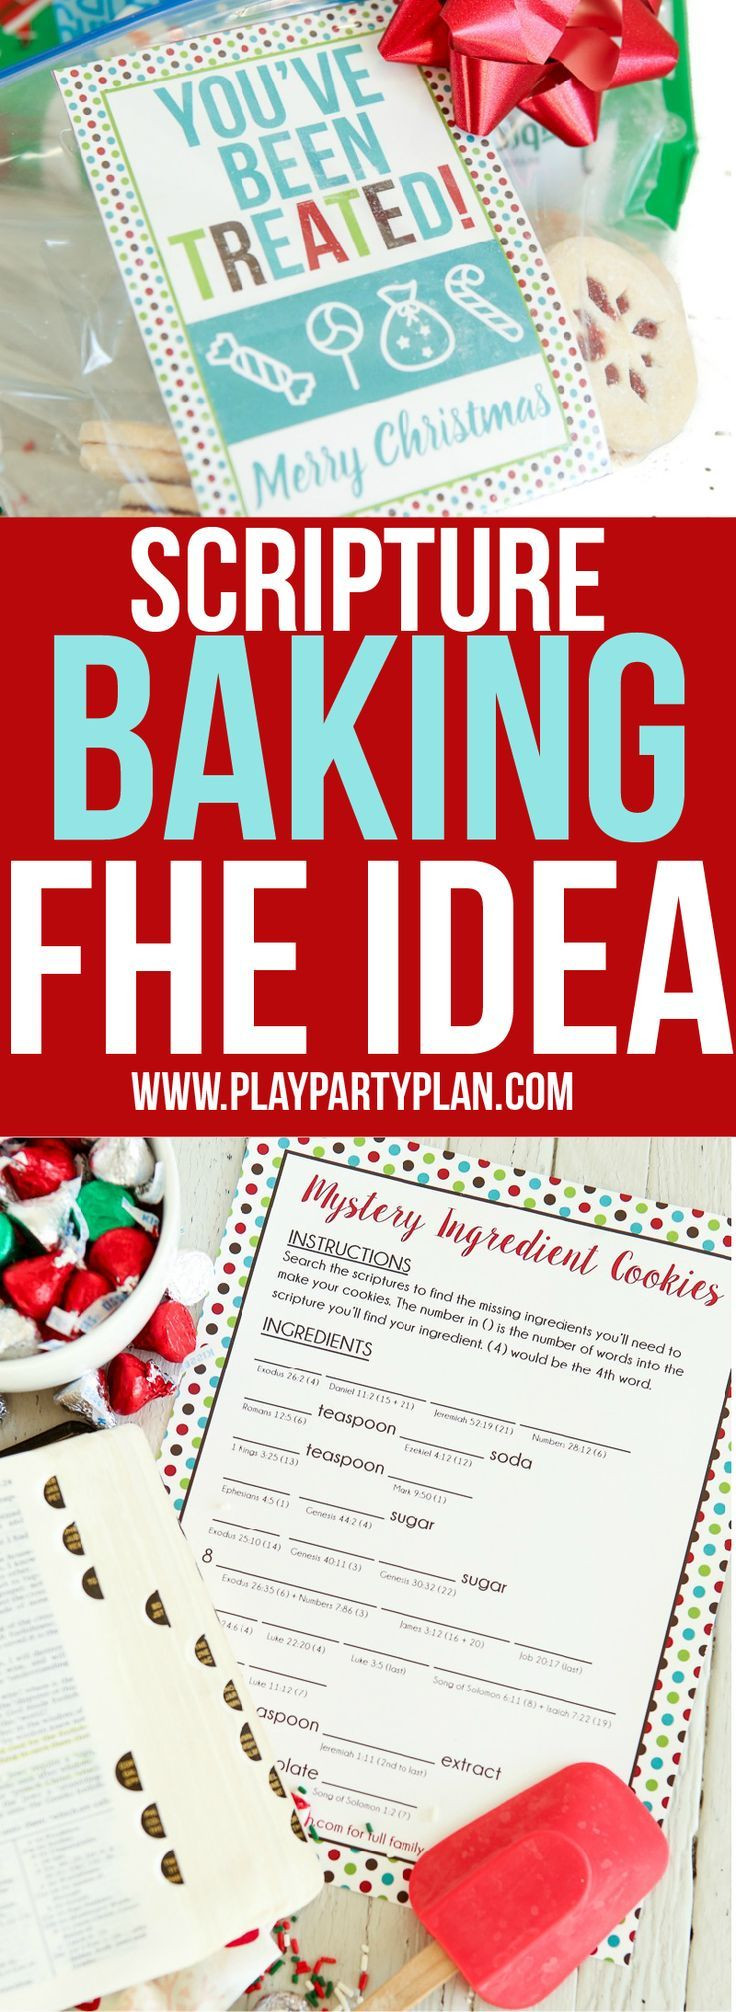 Activity Gift Ideas For Couples
 Best 25 Fun couple activities ideas on Pinterest